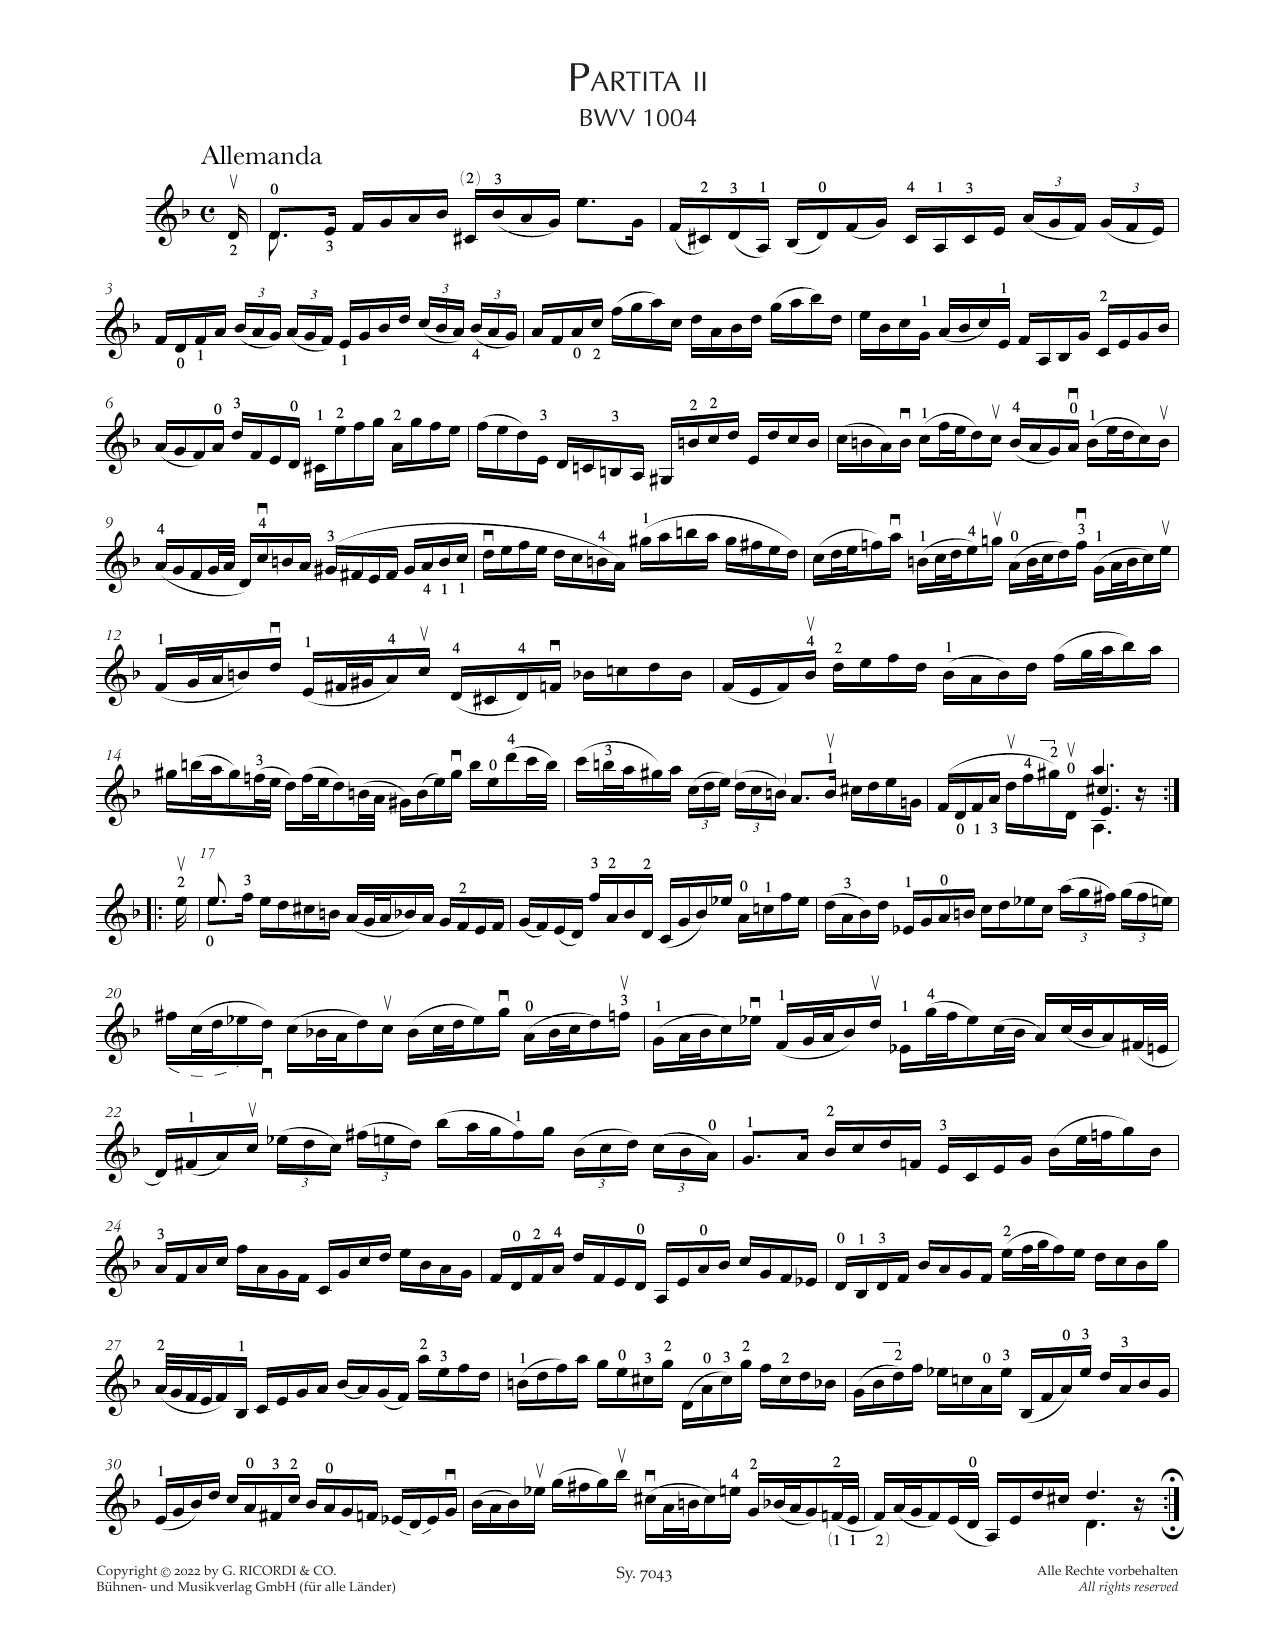 Johann Sebastian Bach Partita II, BWV 1004 Sheet Music Notes & Chords for Violin Solo - Download or Print PDF